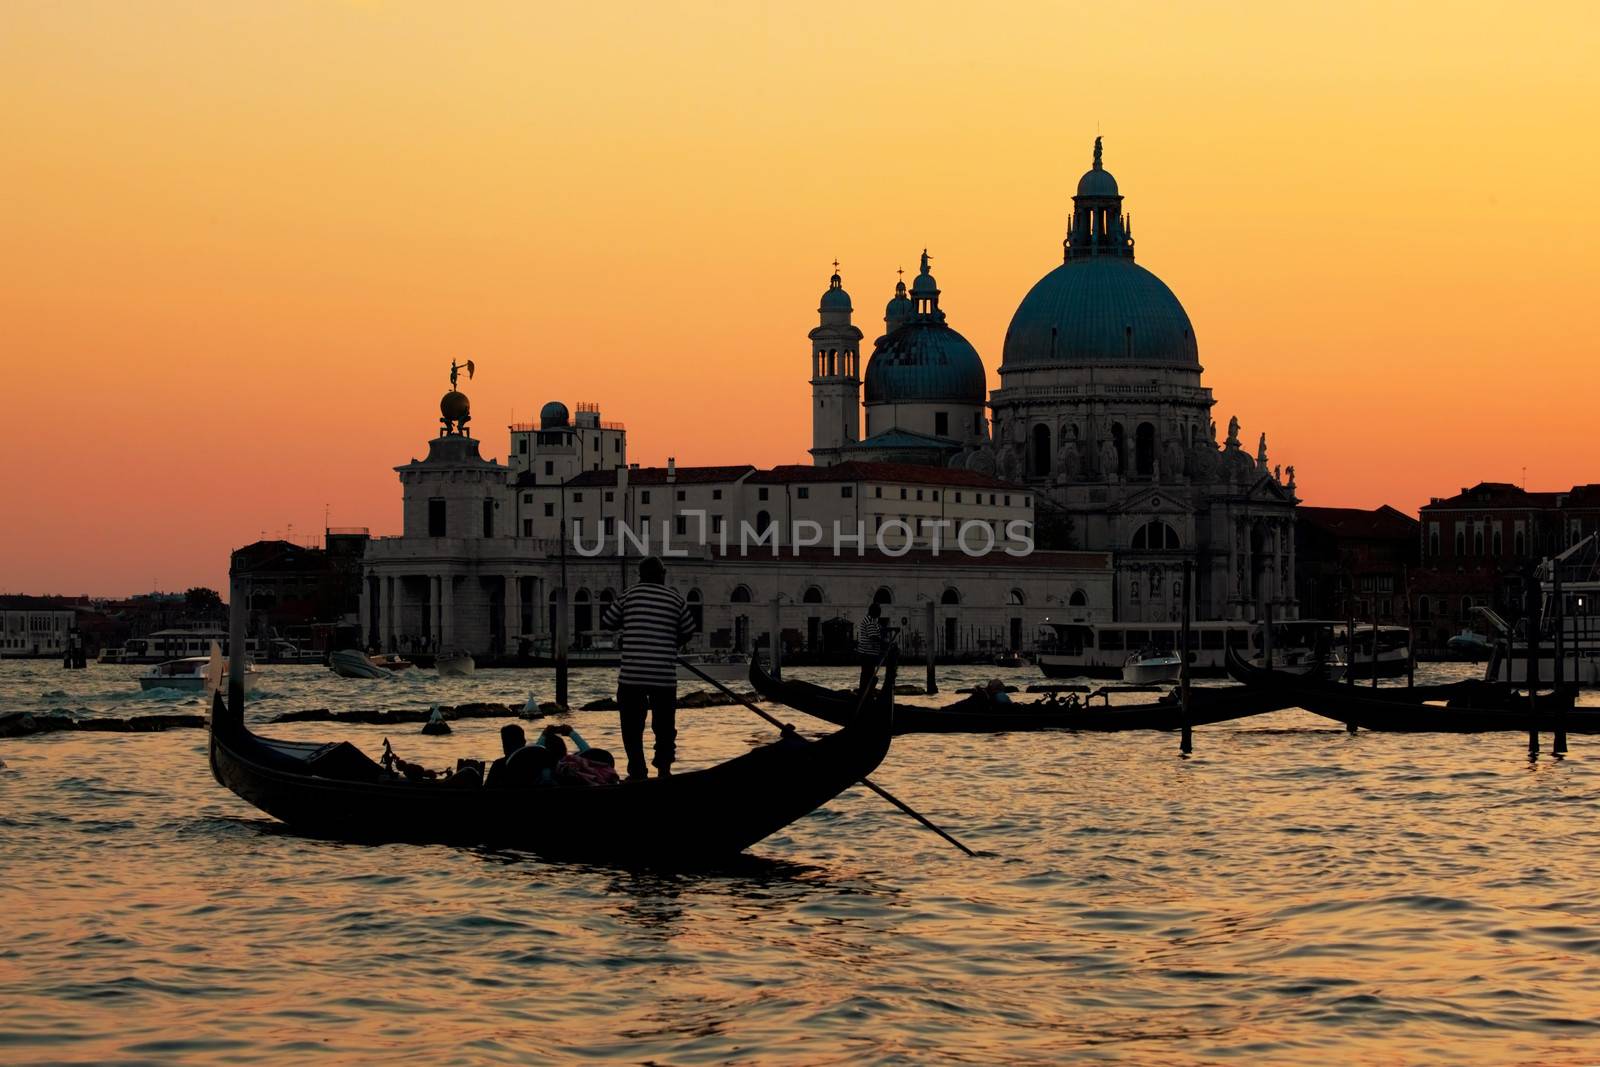 Venice, Italy. Gondola on Grand Canal at sunset. Basilica Santa Maria della Salute in the background